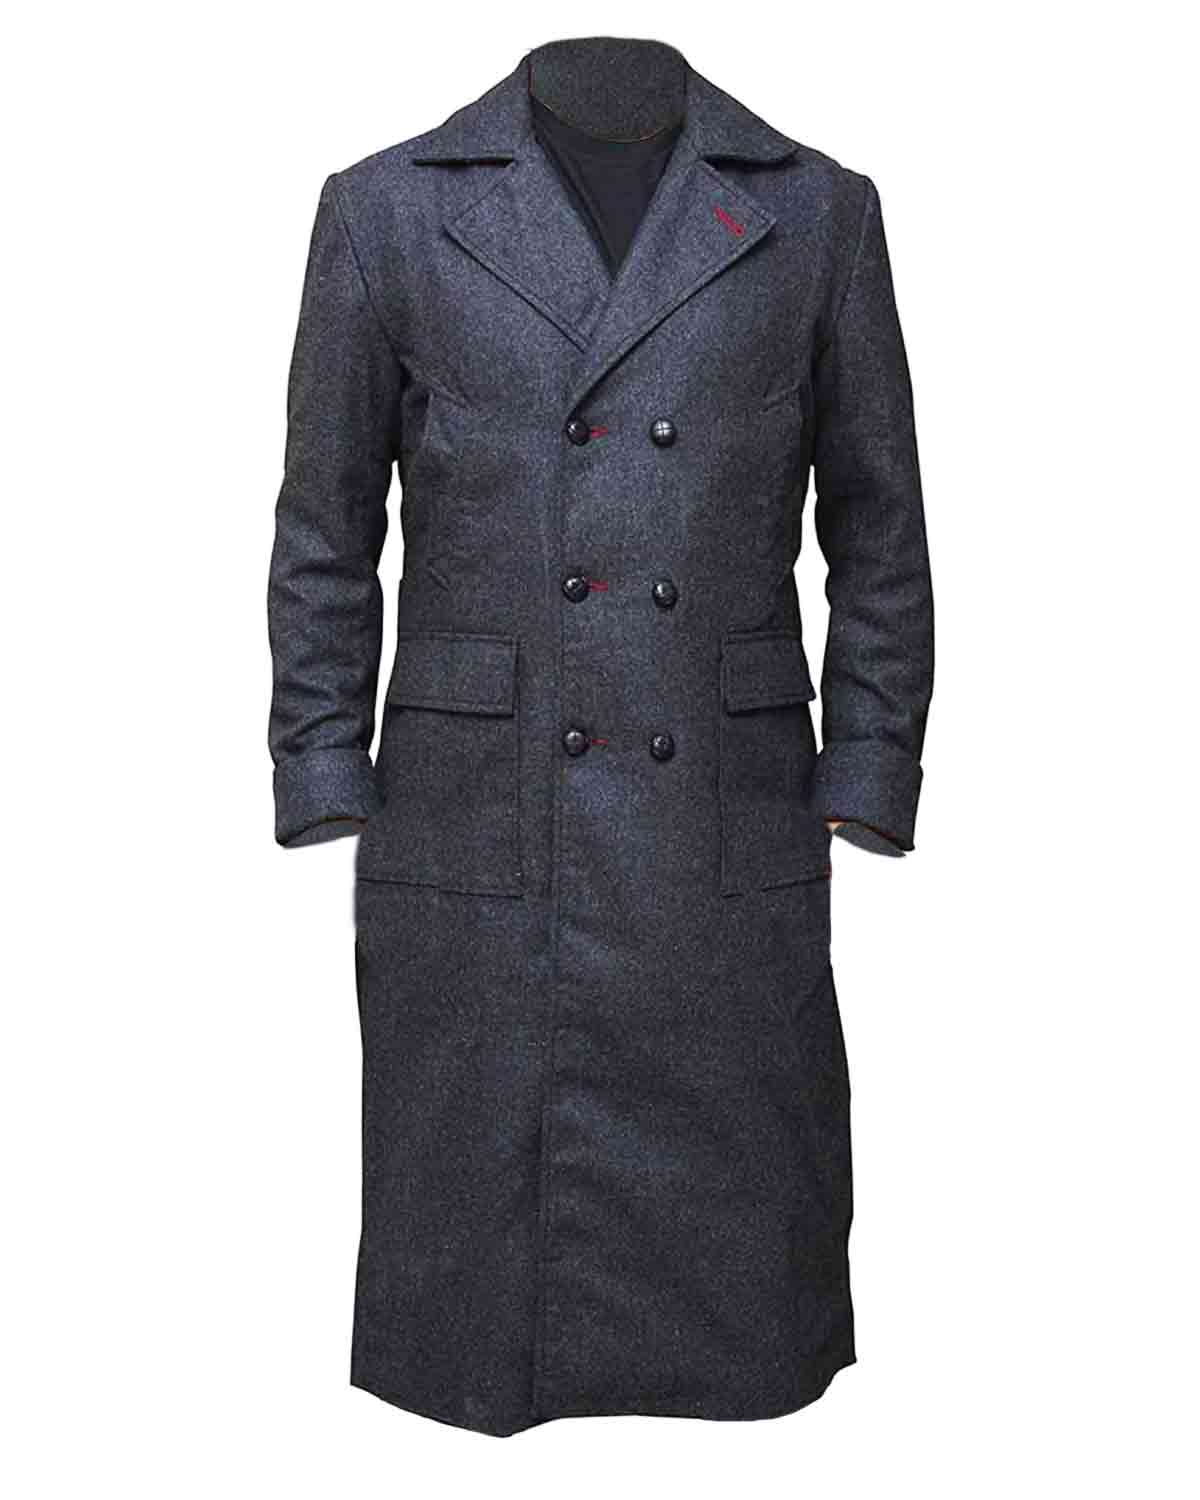 Elite Benedict Cumberbatch Sherlock Holmes Trench Coat